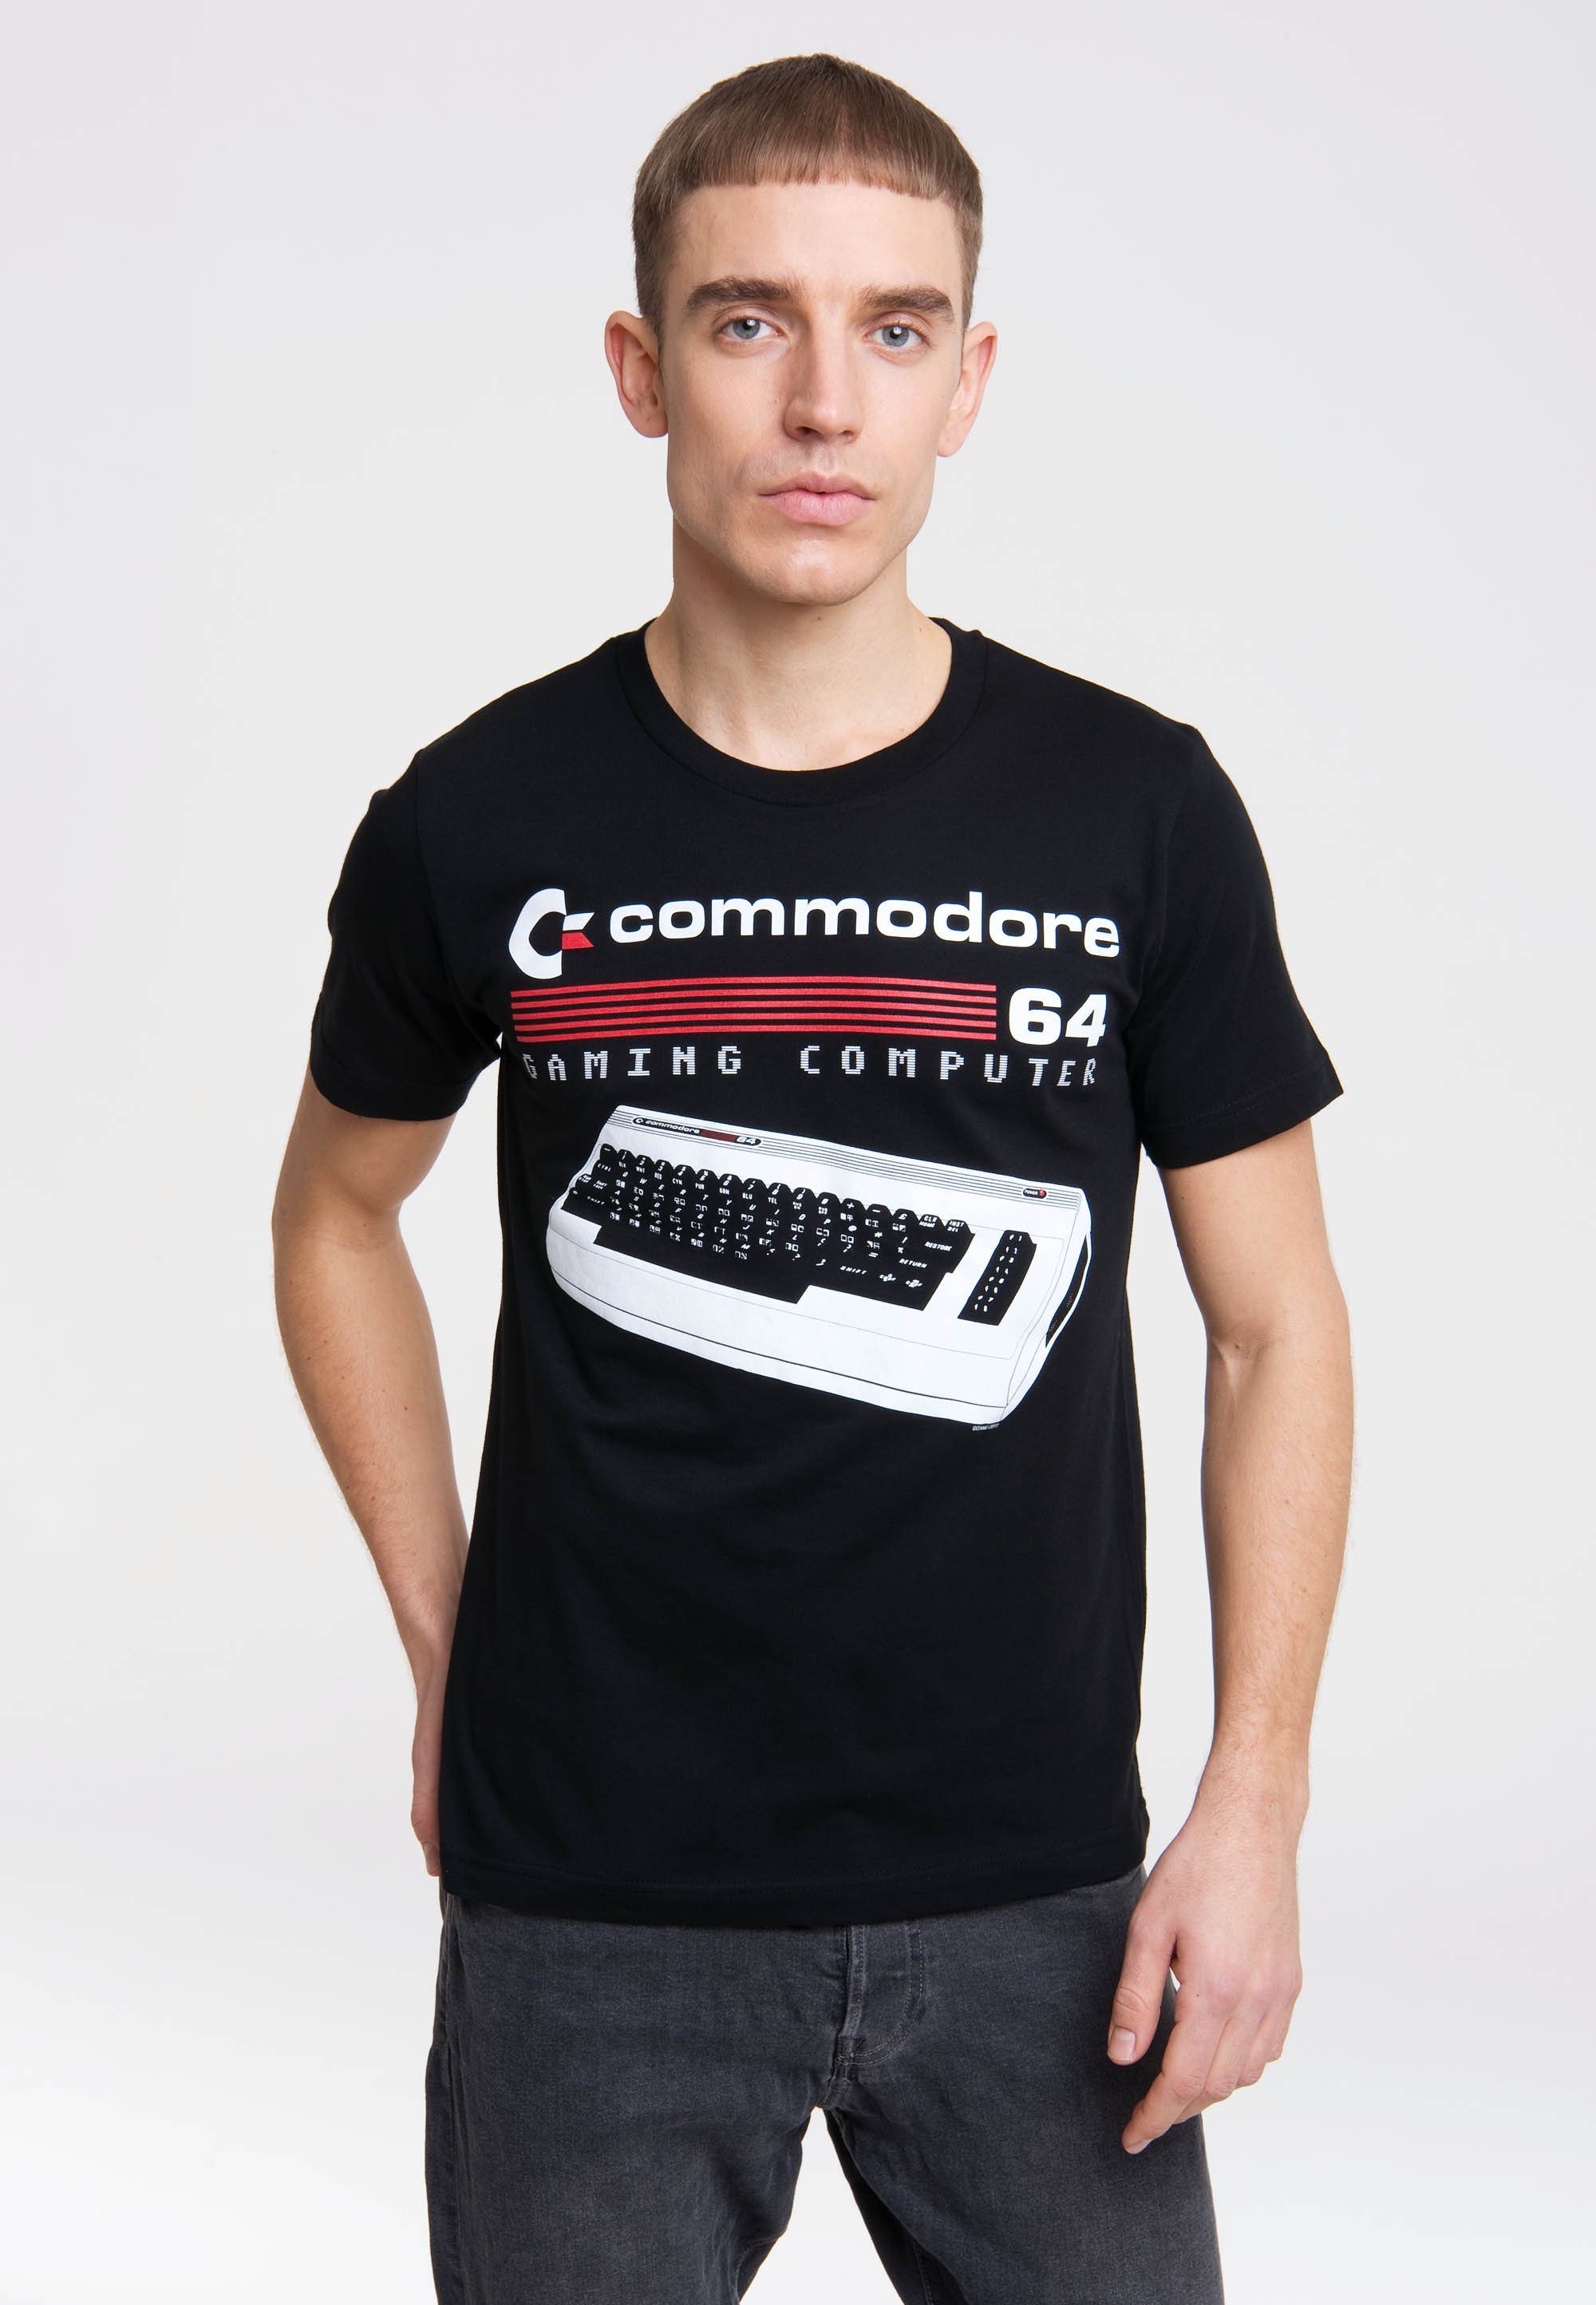 Originaldesign, 64 T-Shirt lizenziertem Marke Commodore Retro-Shirt Lässiges Logoshirt der mit LOGOSHIRT